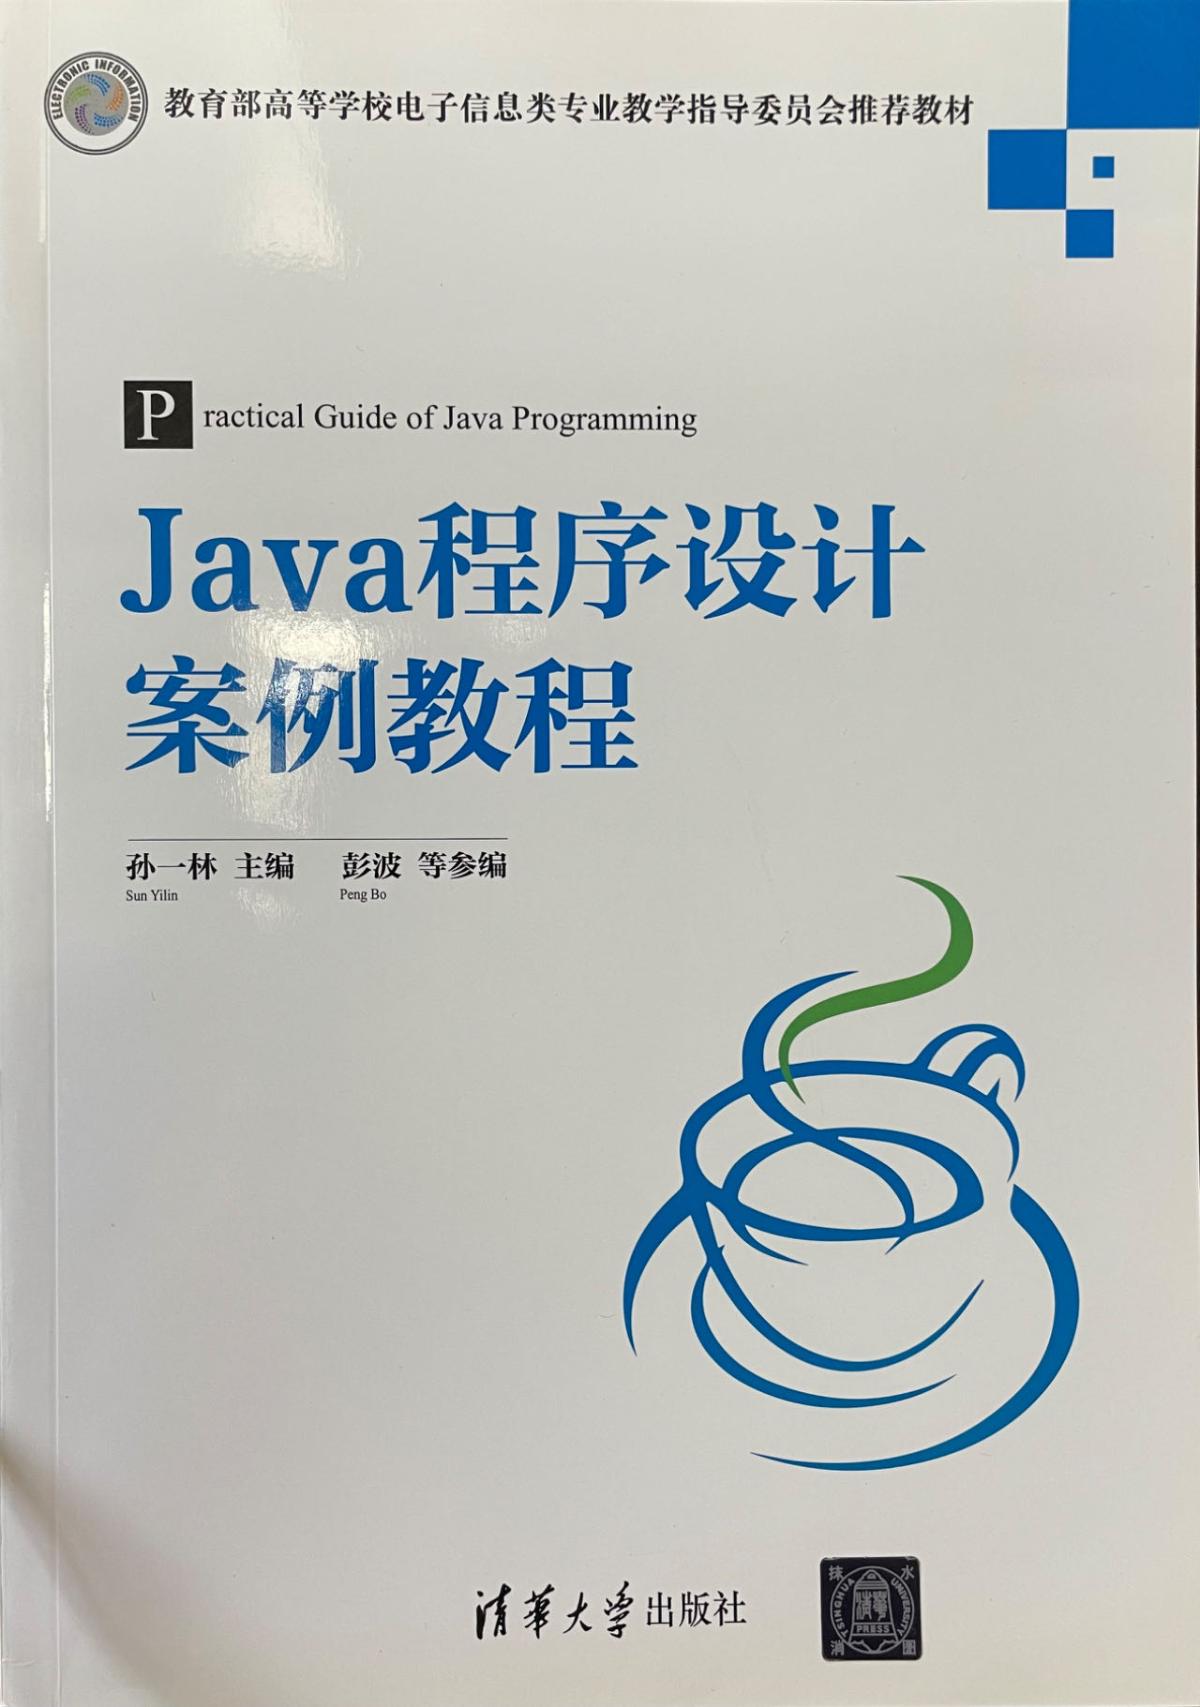 Java程序设计案例教程.jpg